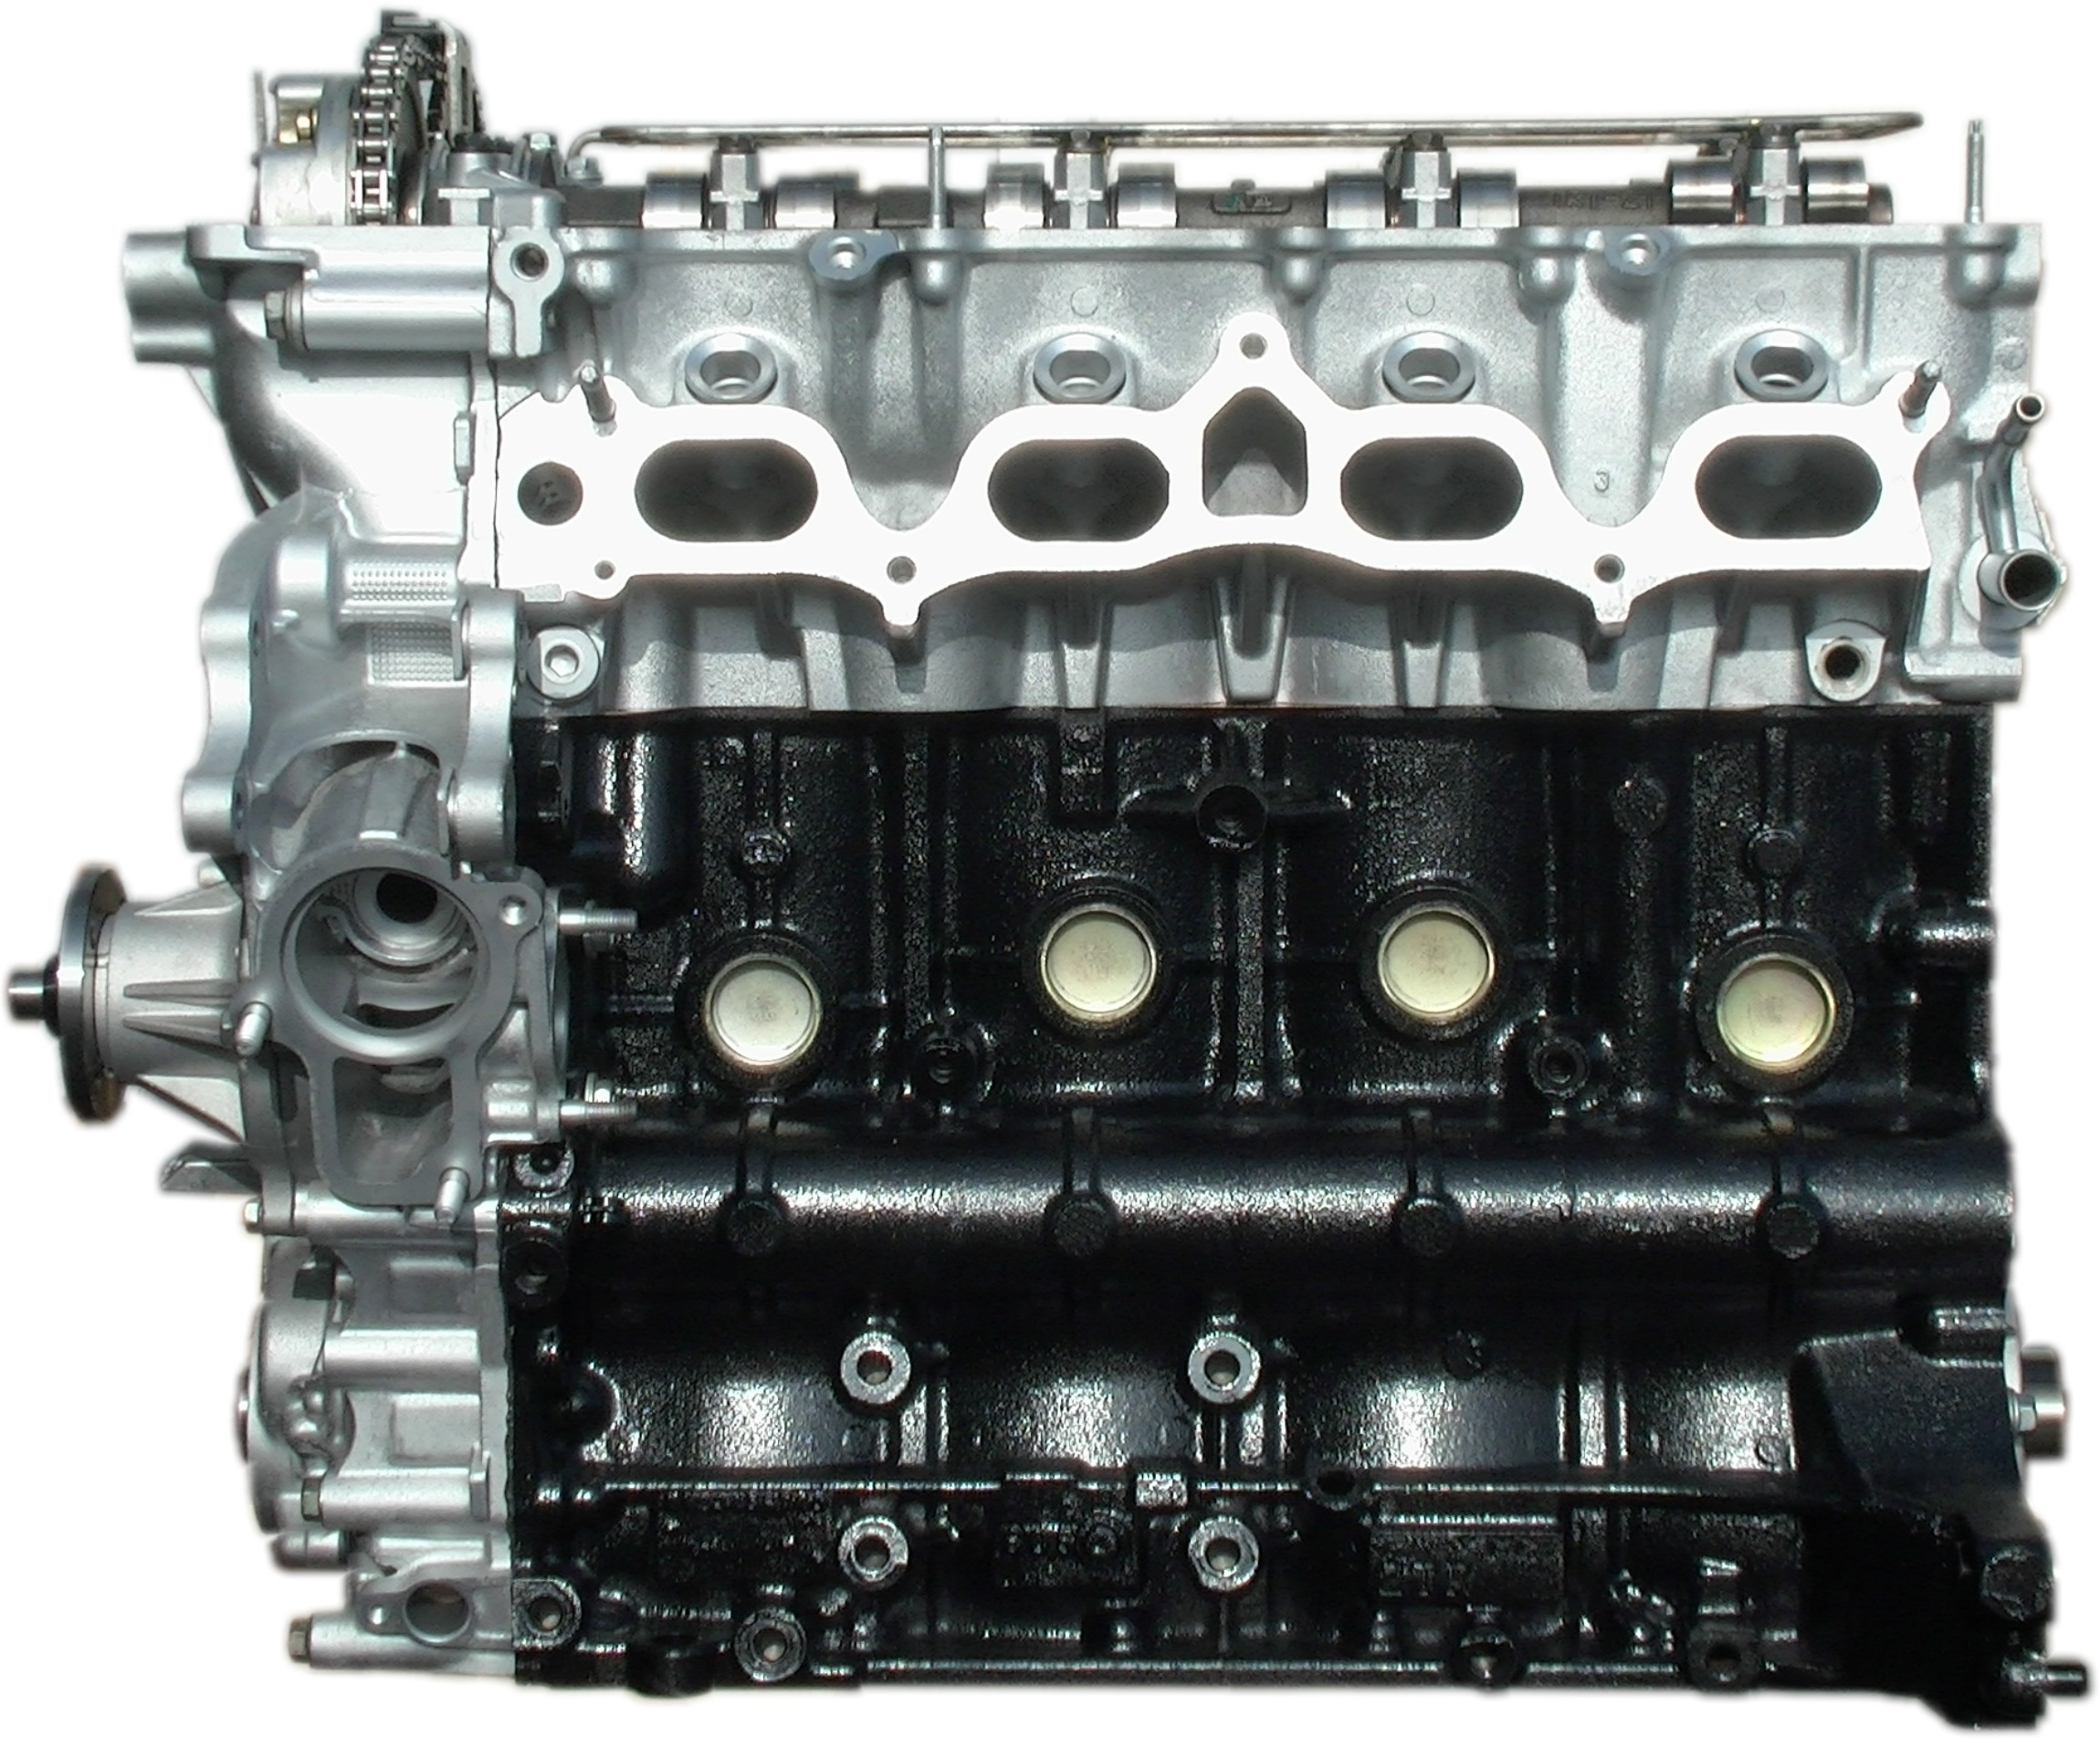 2TR-FE Toyota engine